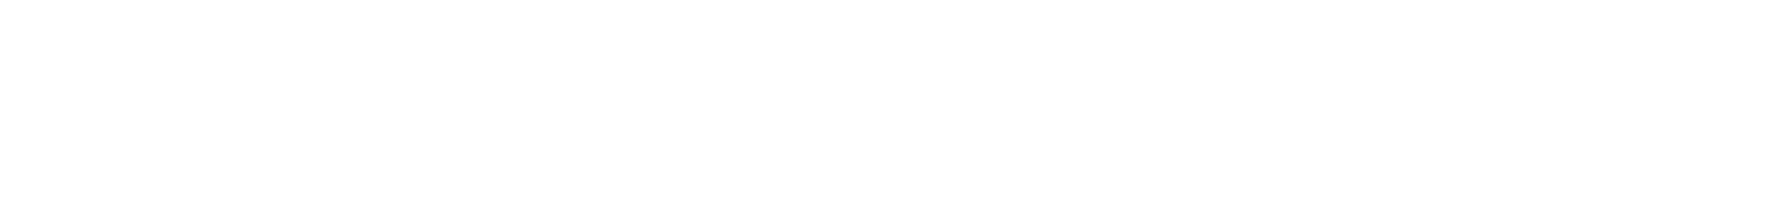 Qualitravel logo new 1